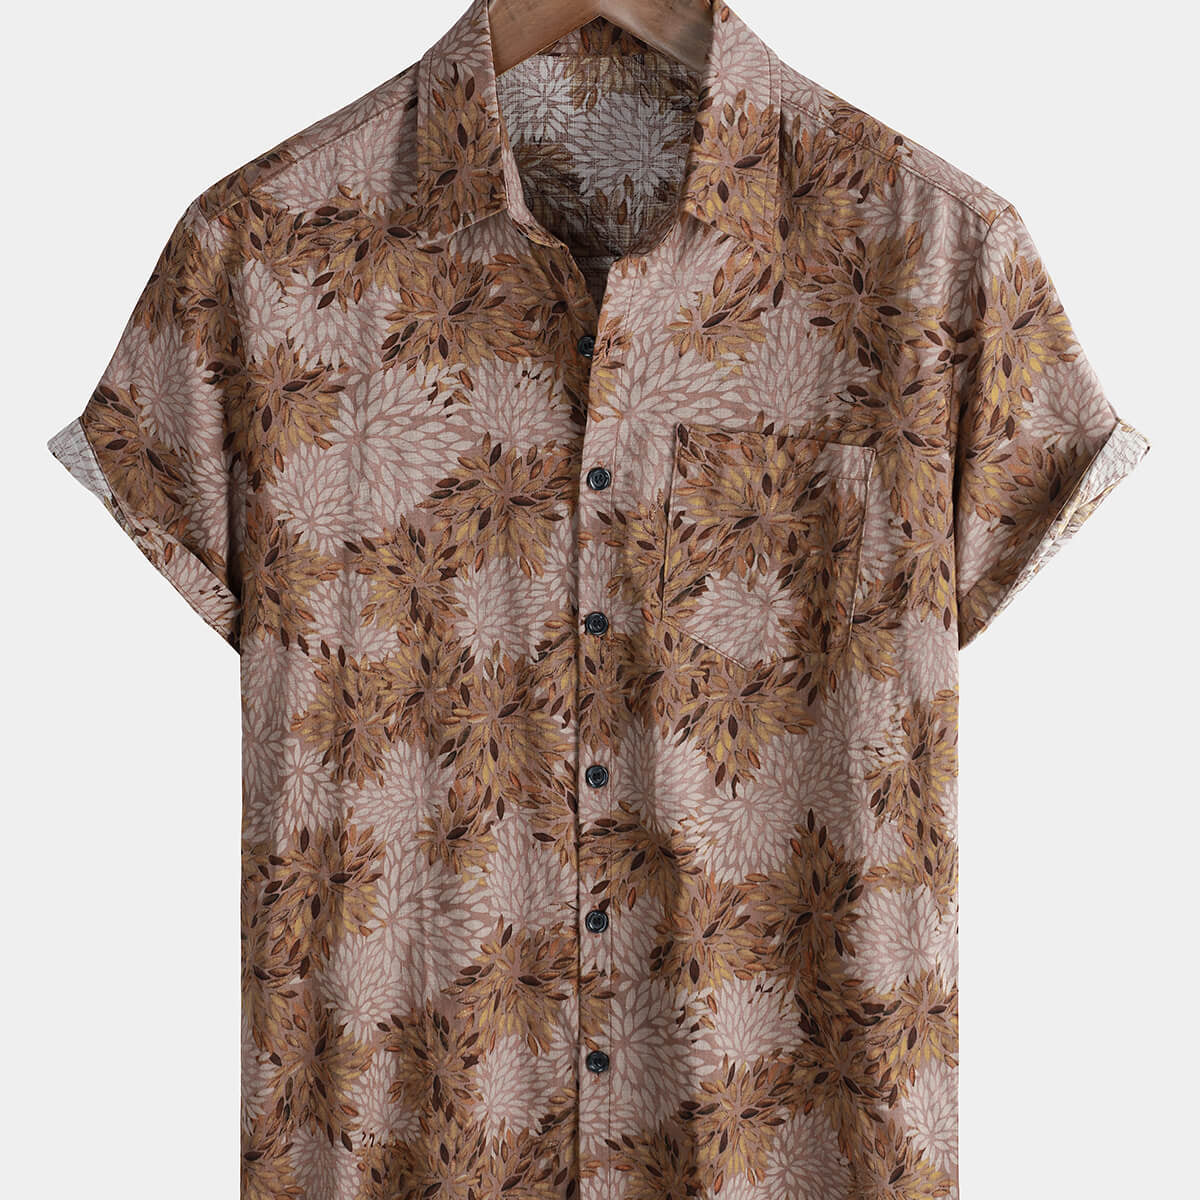 Men's Retro Pocket Floral Holiday Casual Summer Short Sleeve Button Up Shirt